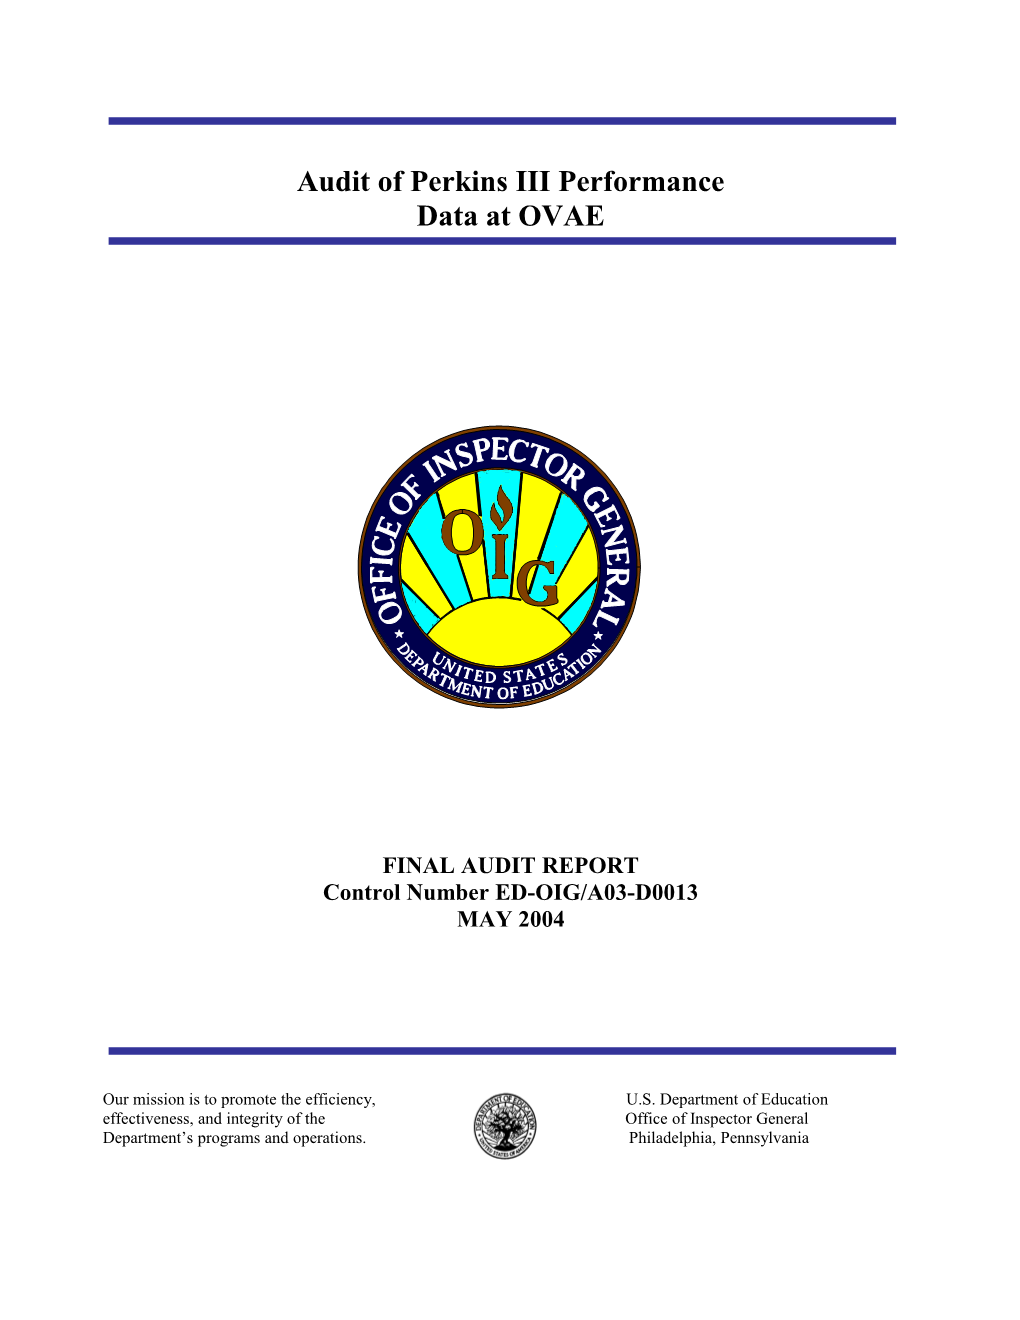 Audit of Perkins III Performance Data at OVAE